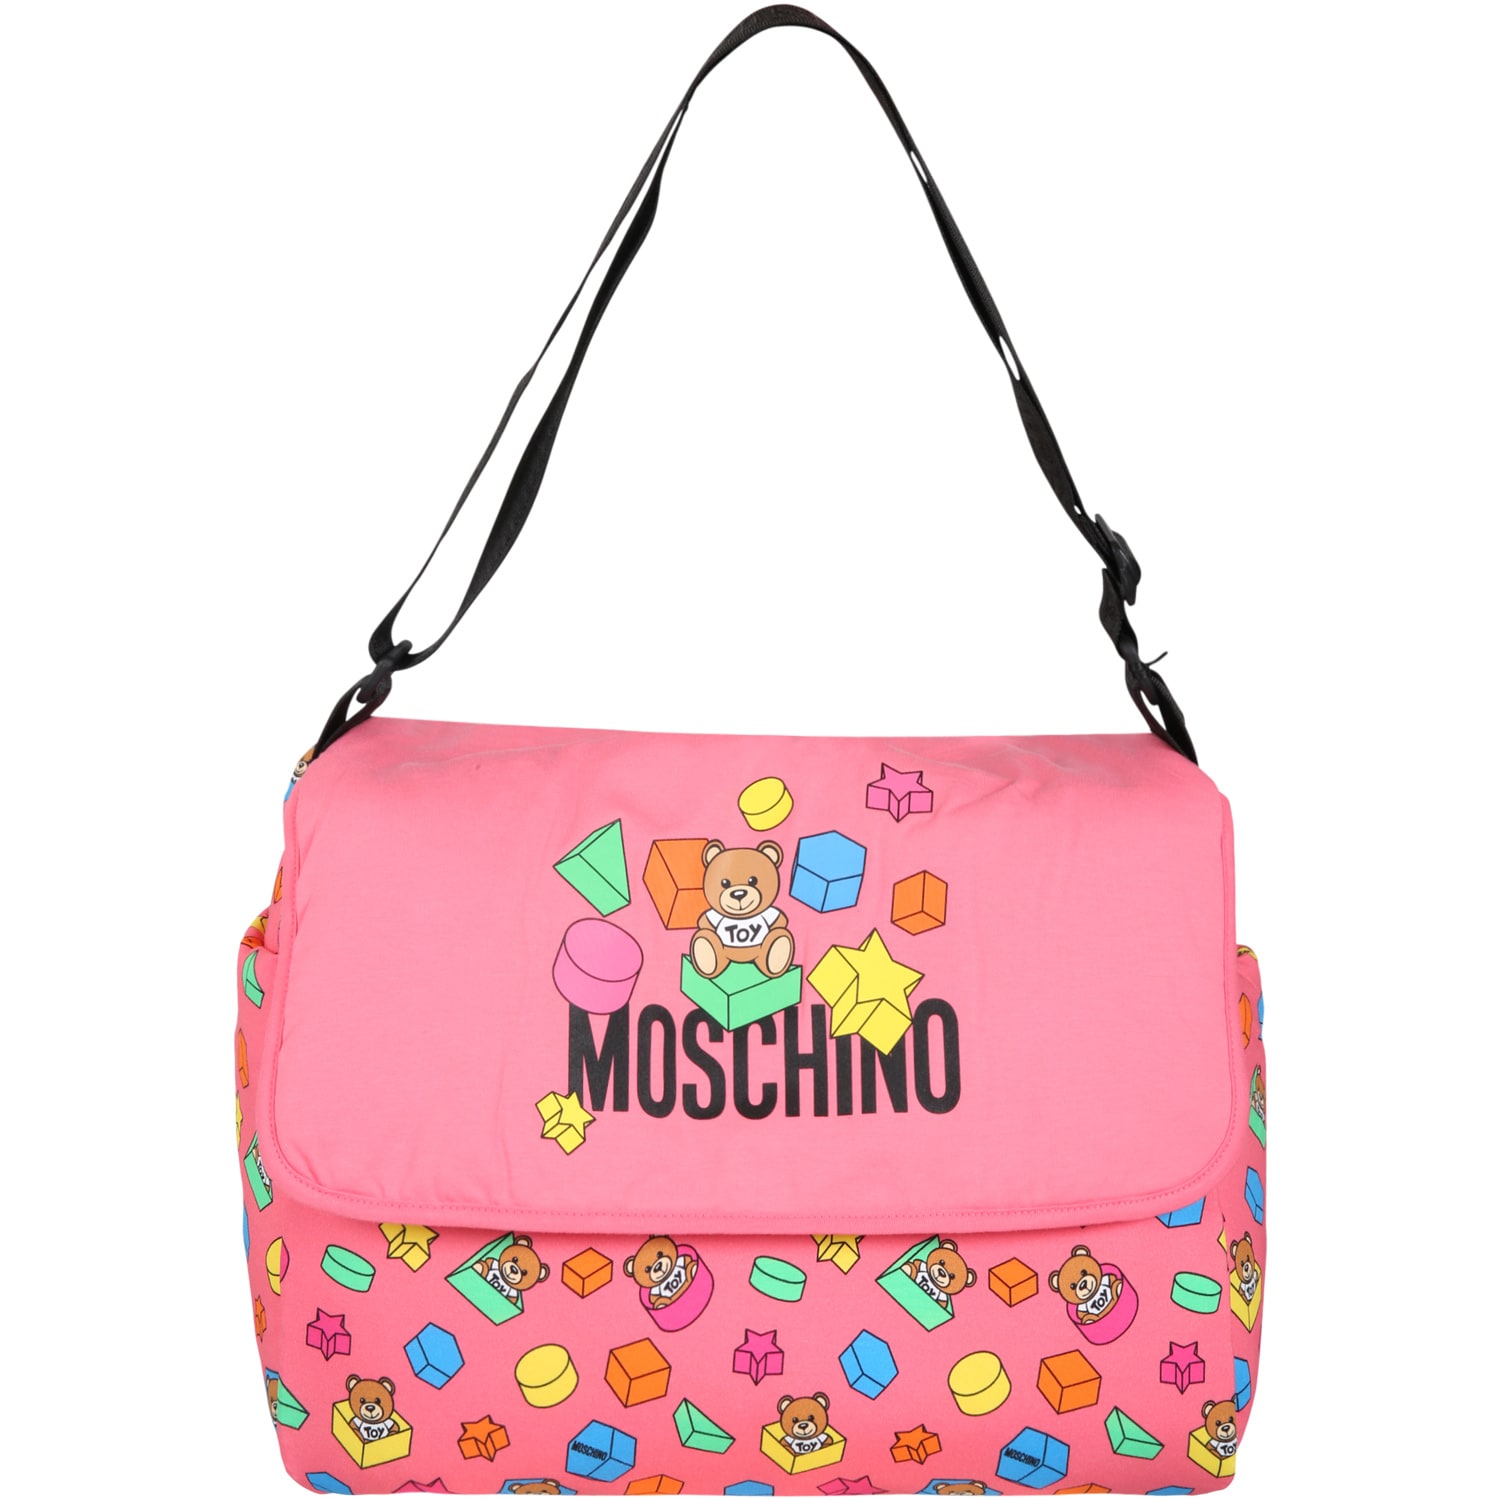 moschino side bag